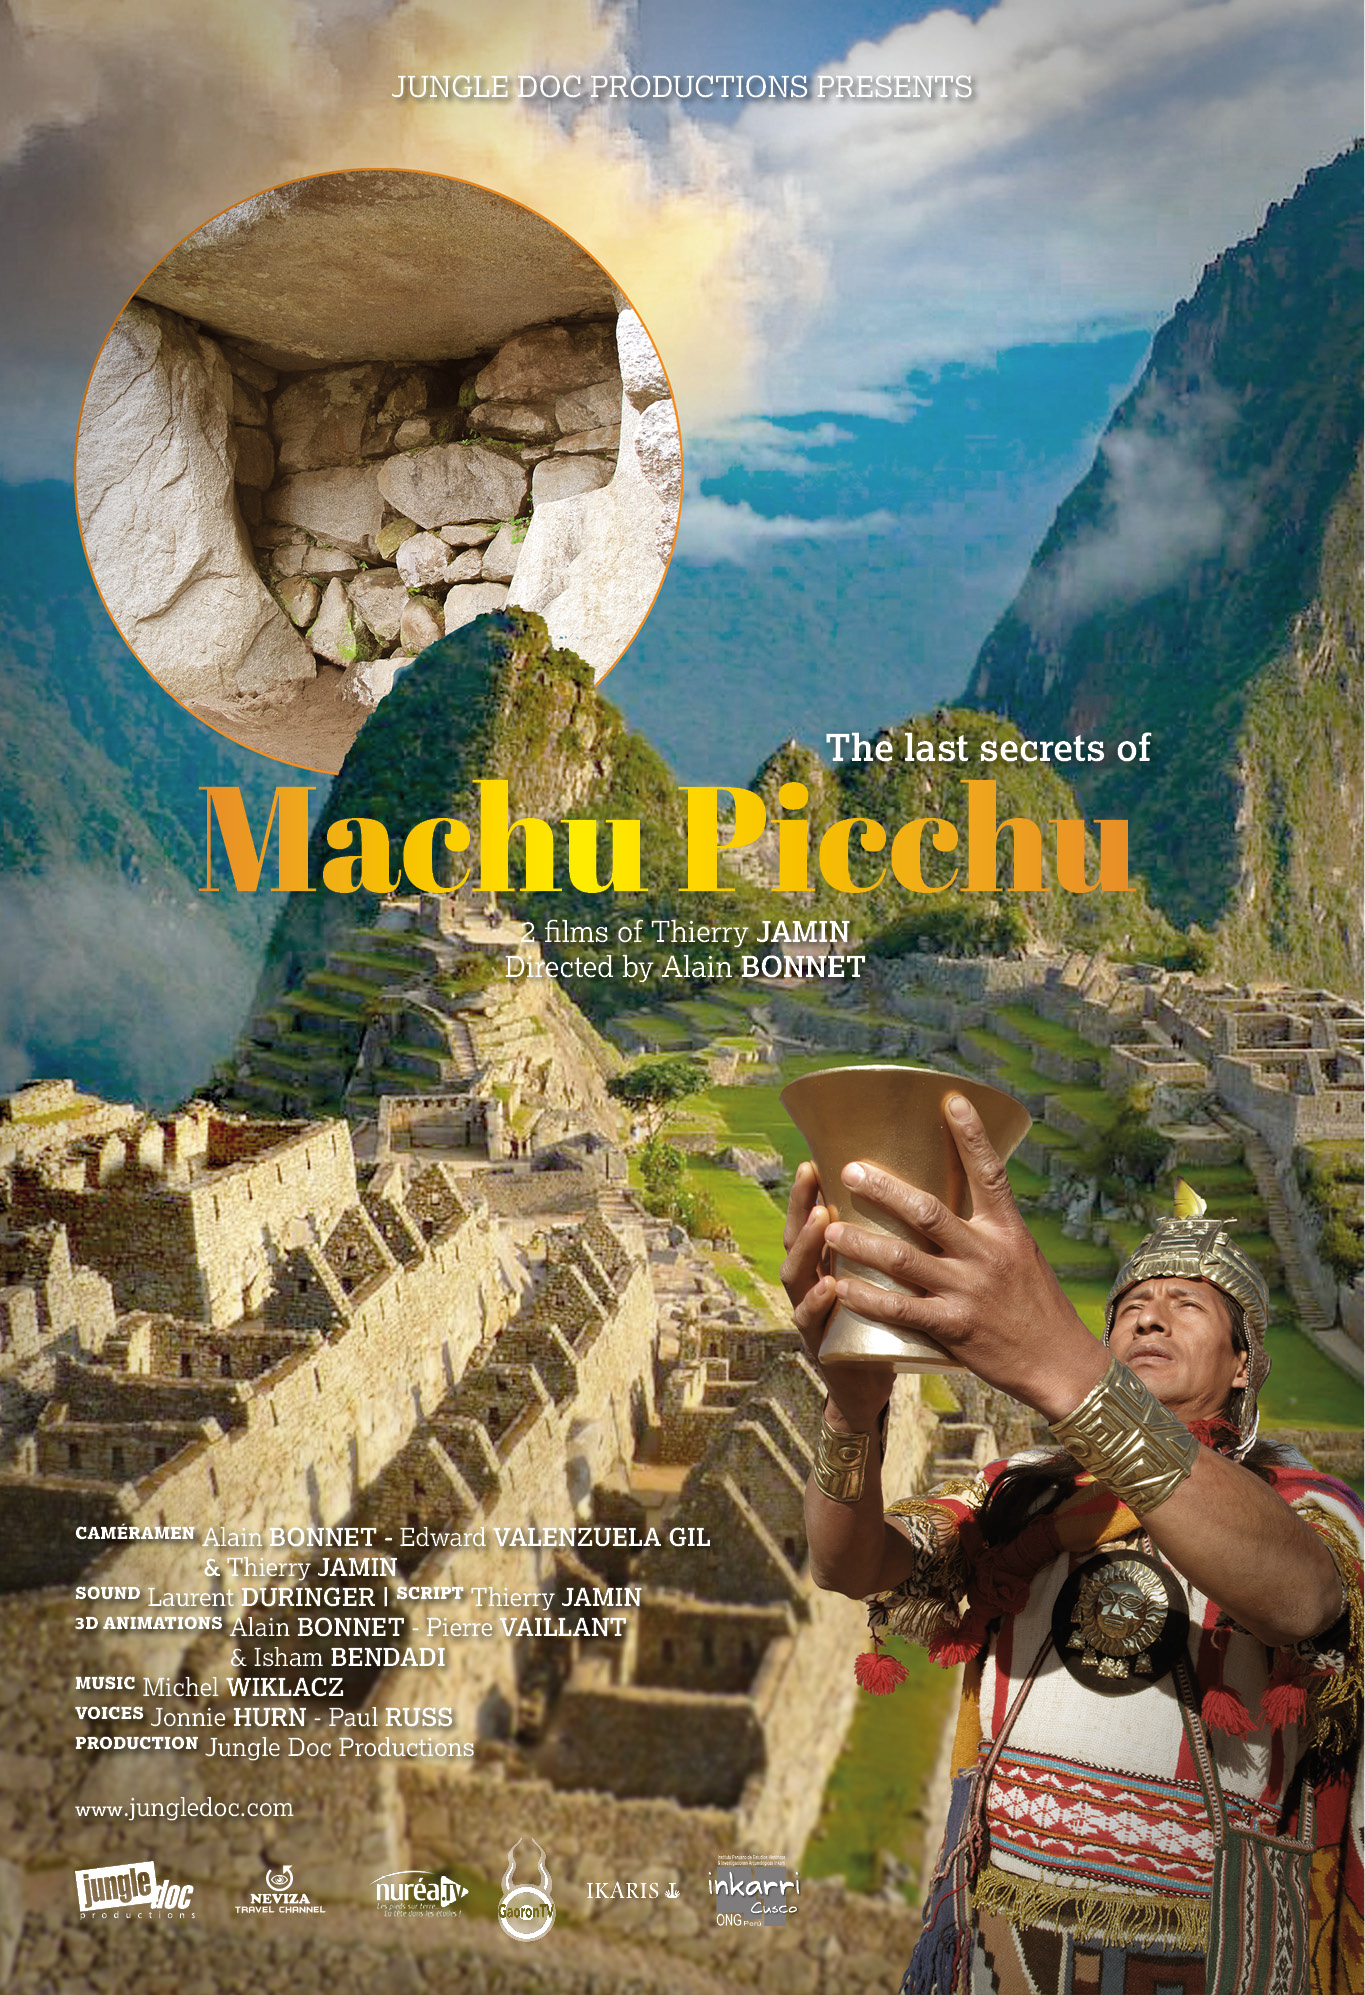 The last secrets of Machu Picchu